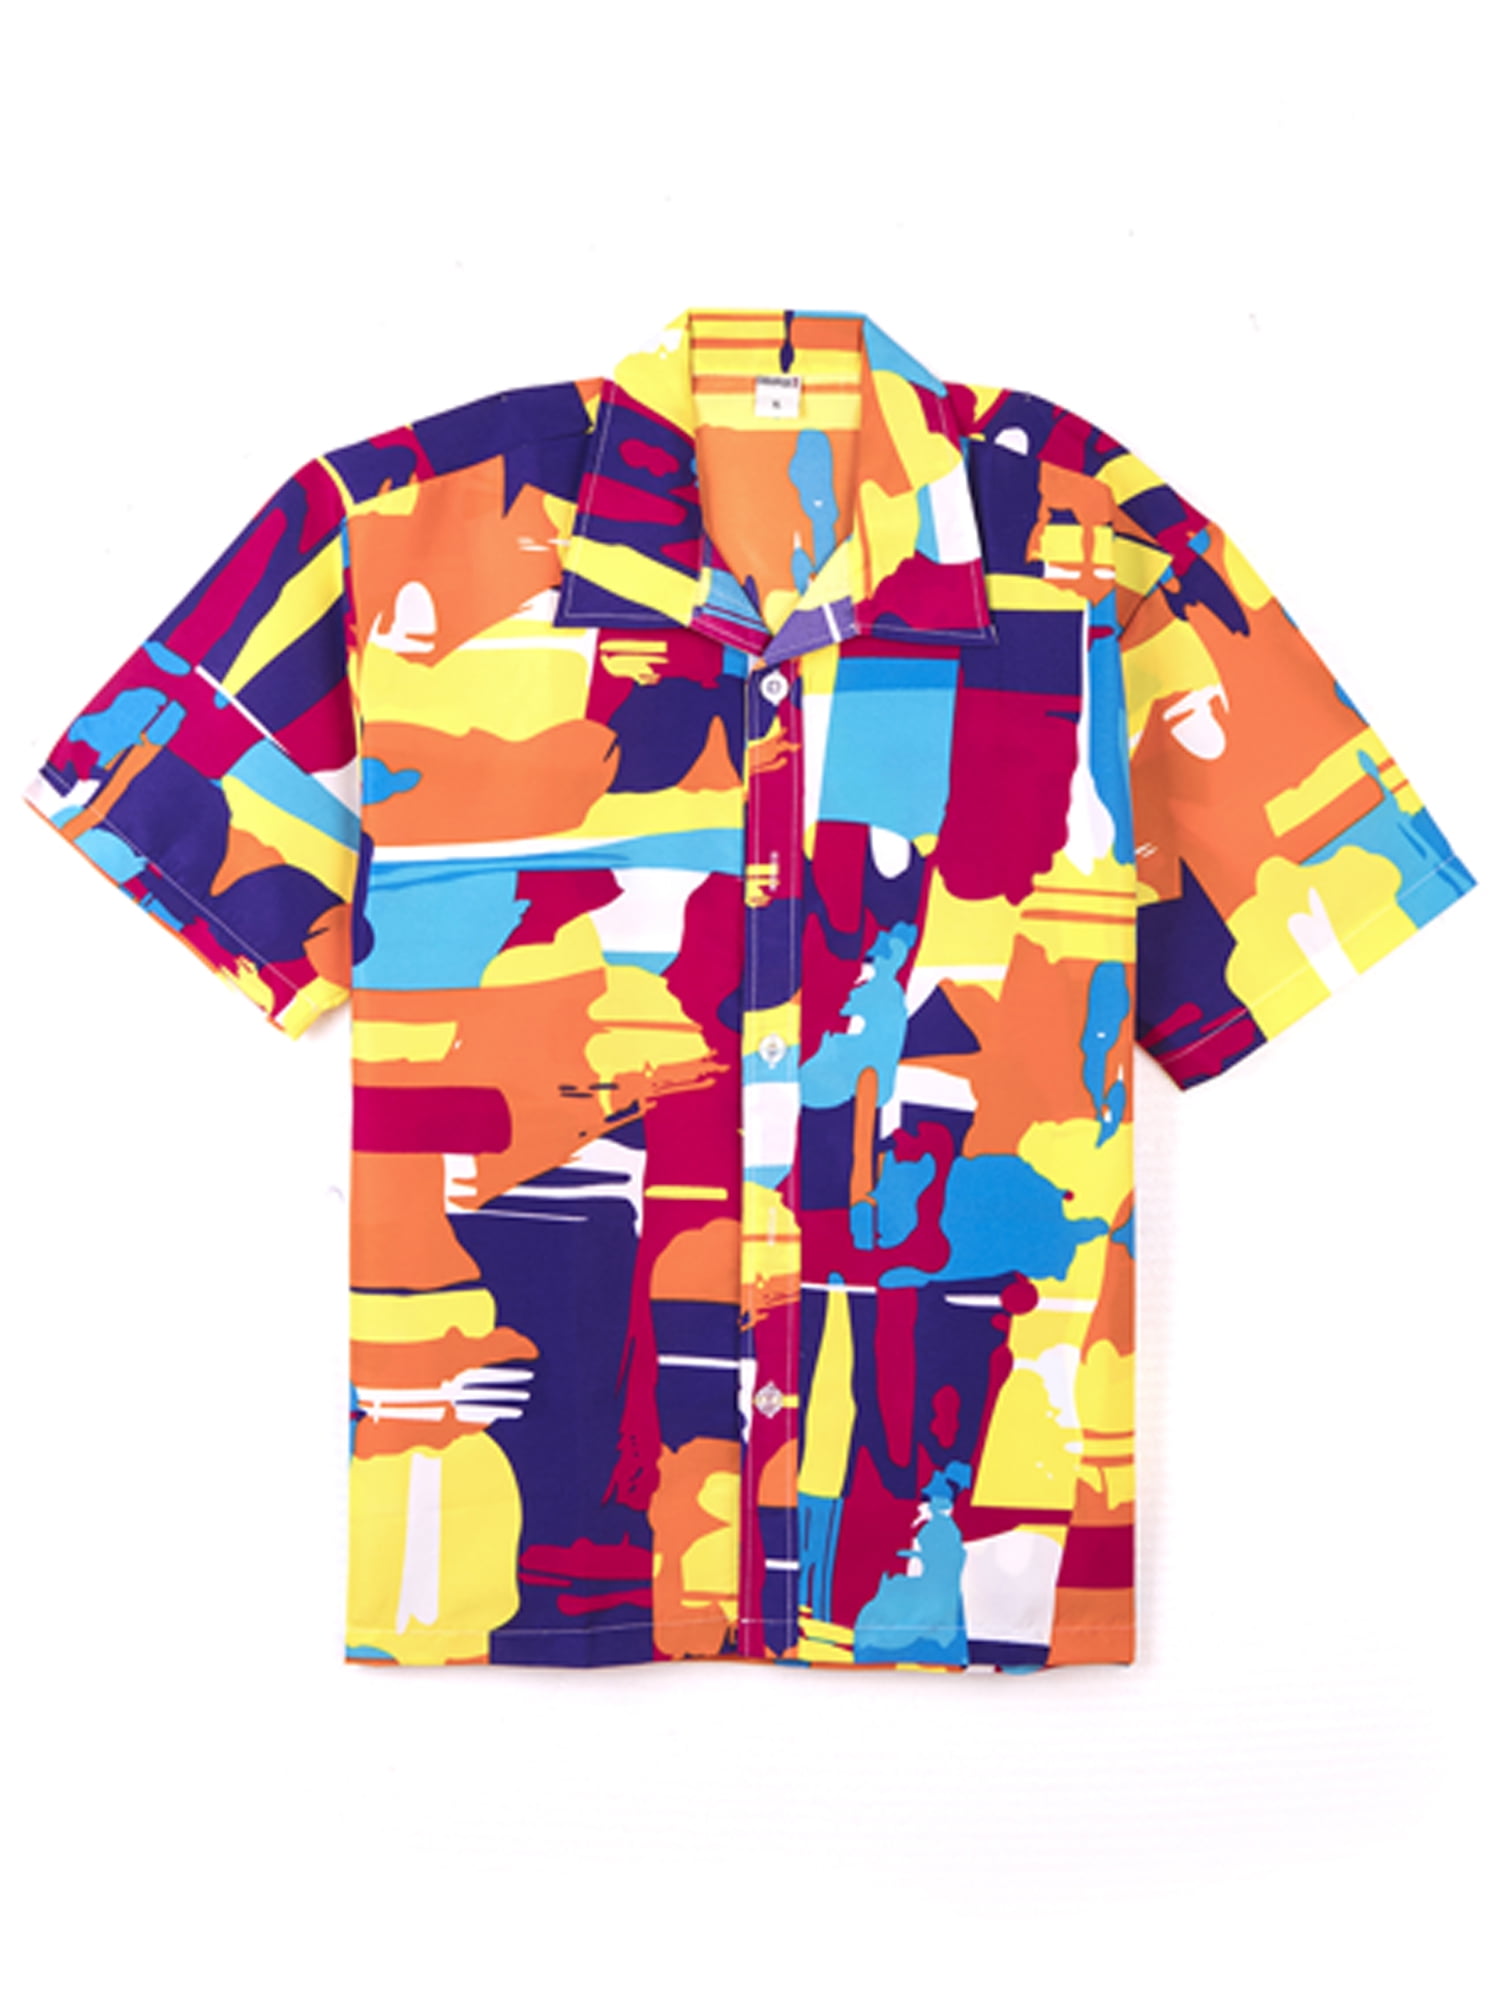 Sweatwater Men Print Hawaii Button Front Casual Beachwear Long Sleeve Shirts